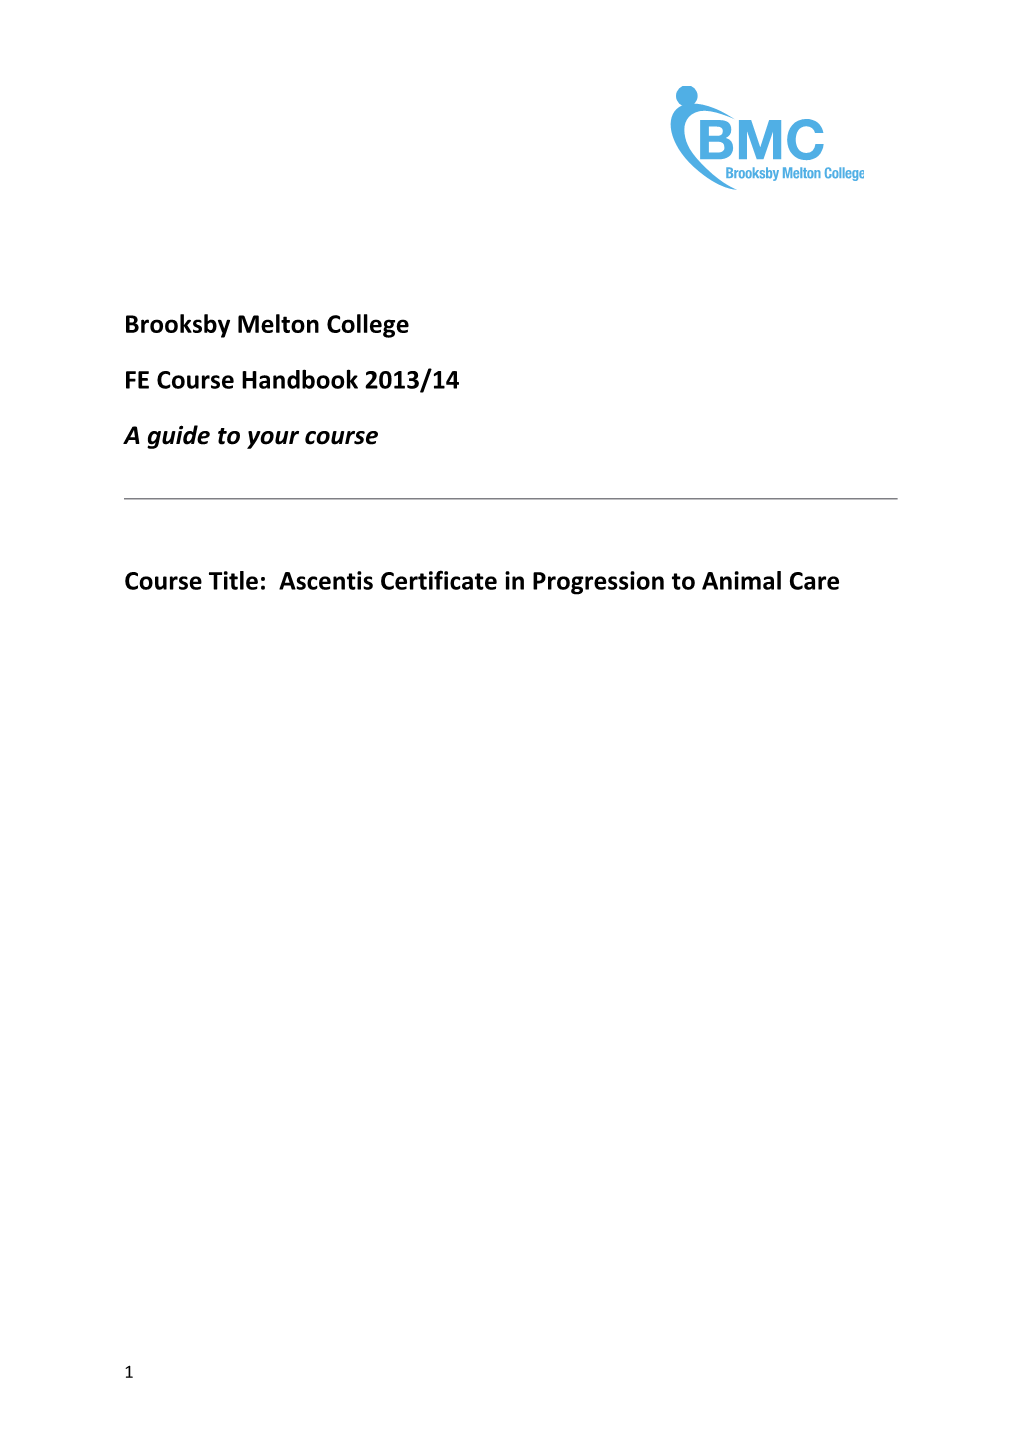 Course Title: Ascentis Certificate in Progression to Animal Care